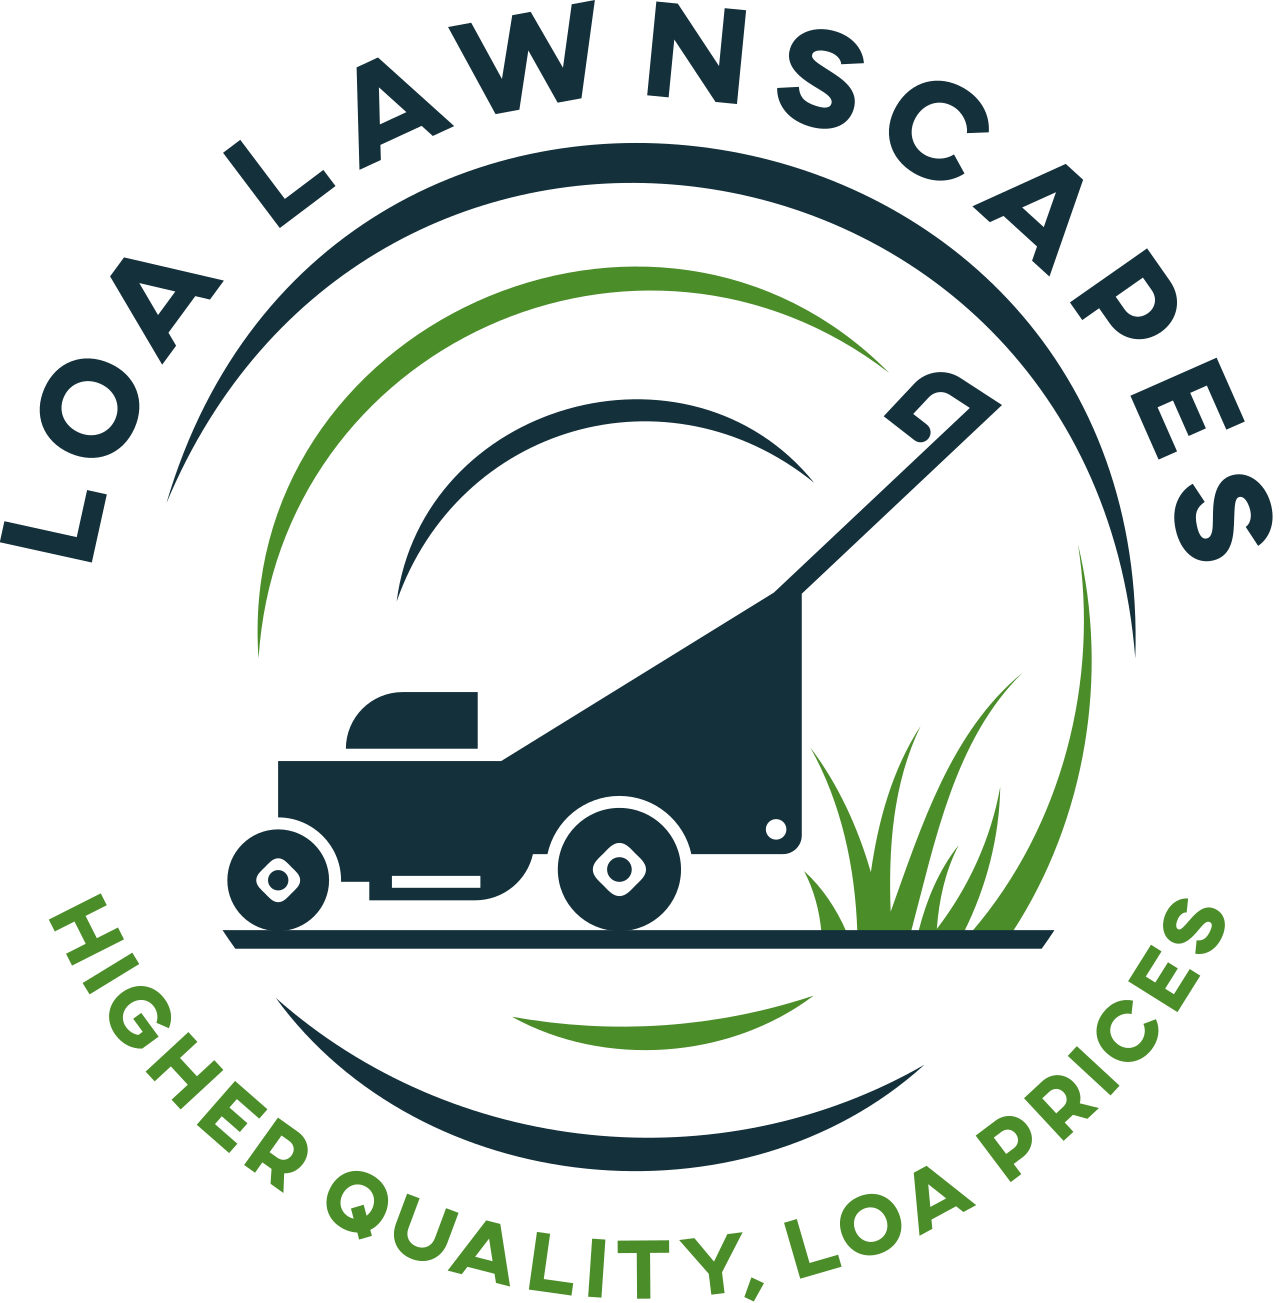 Loa Lawnscapes's logo